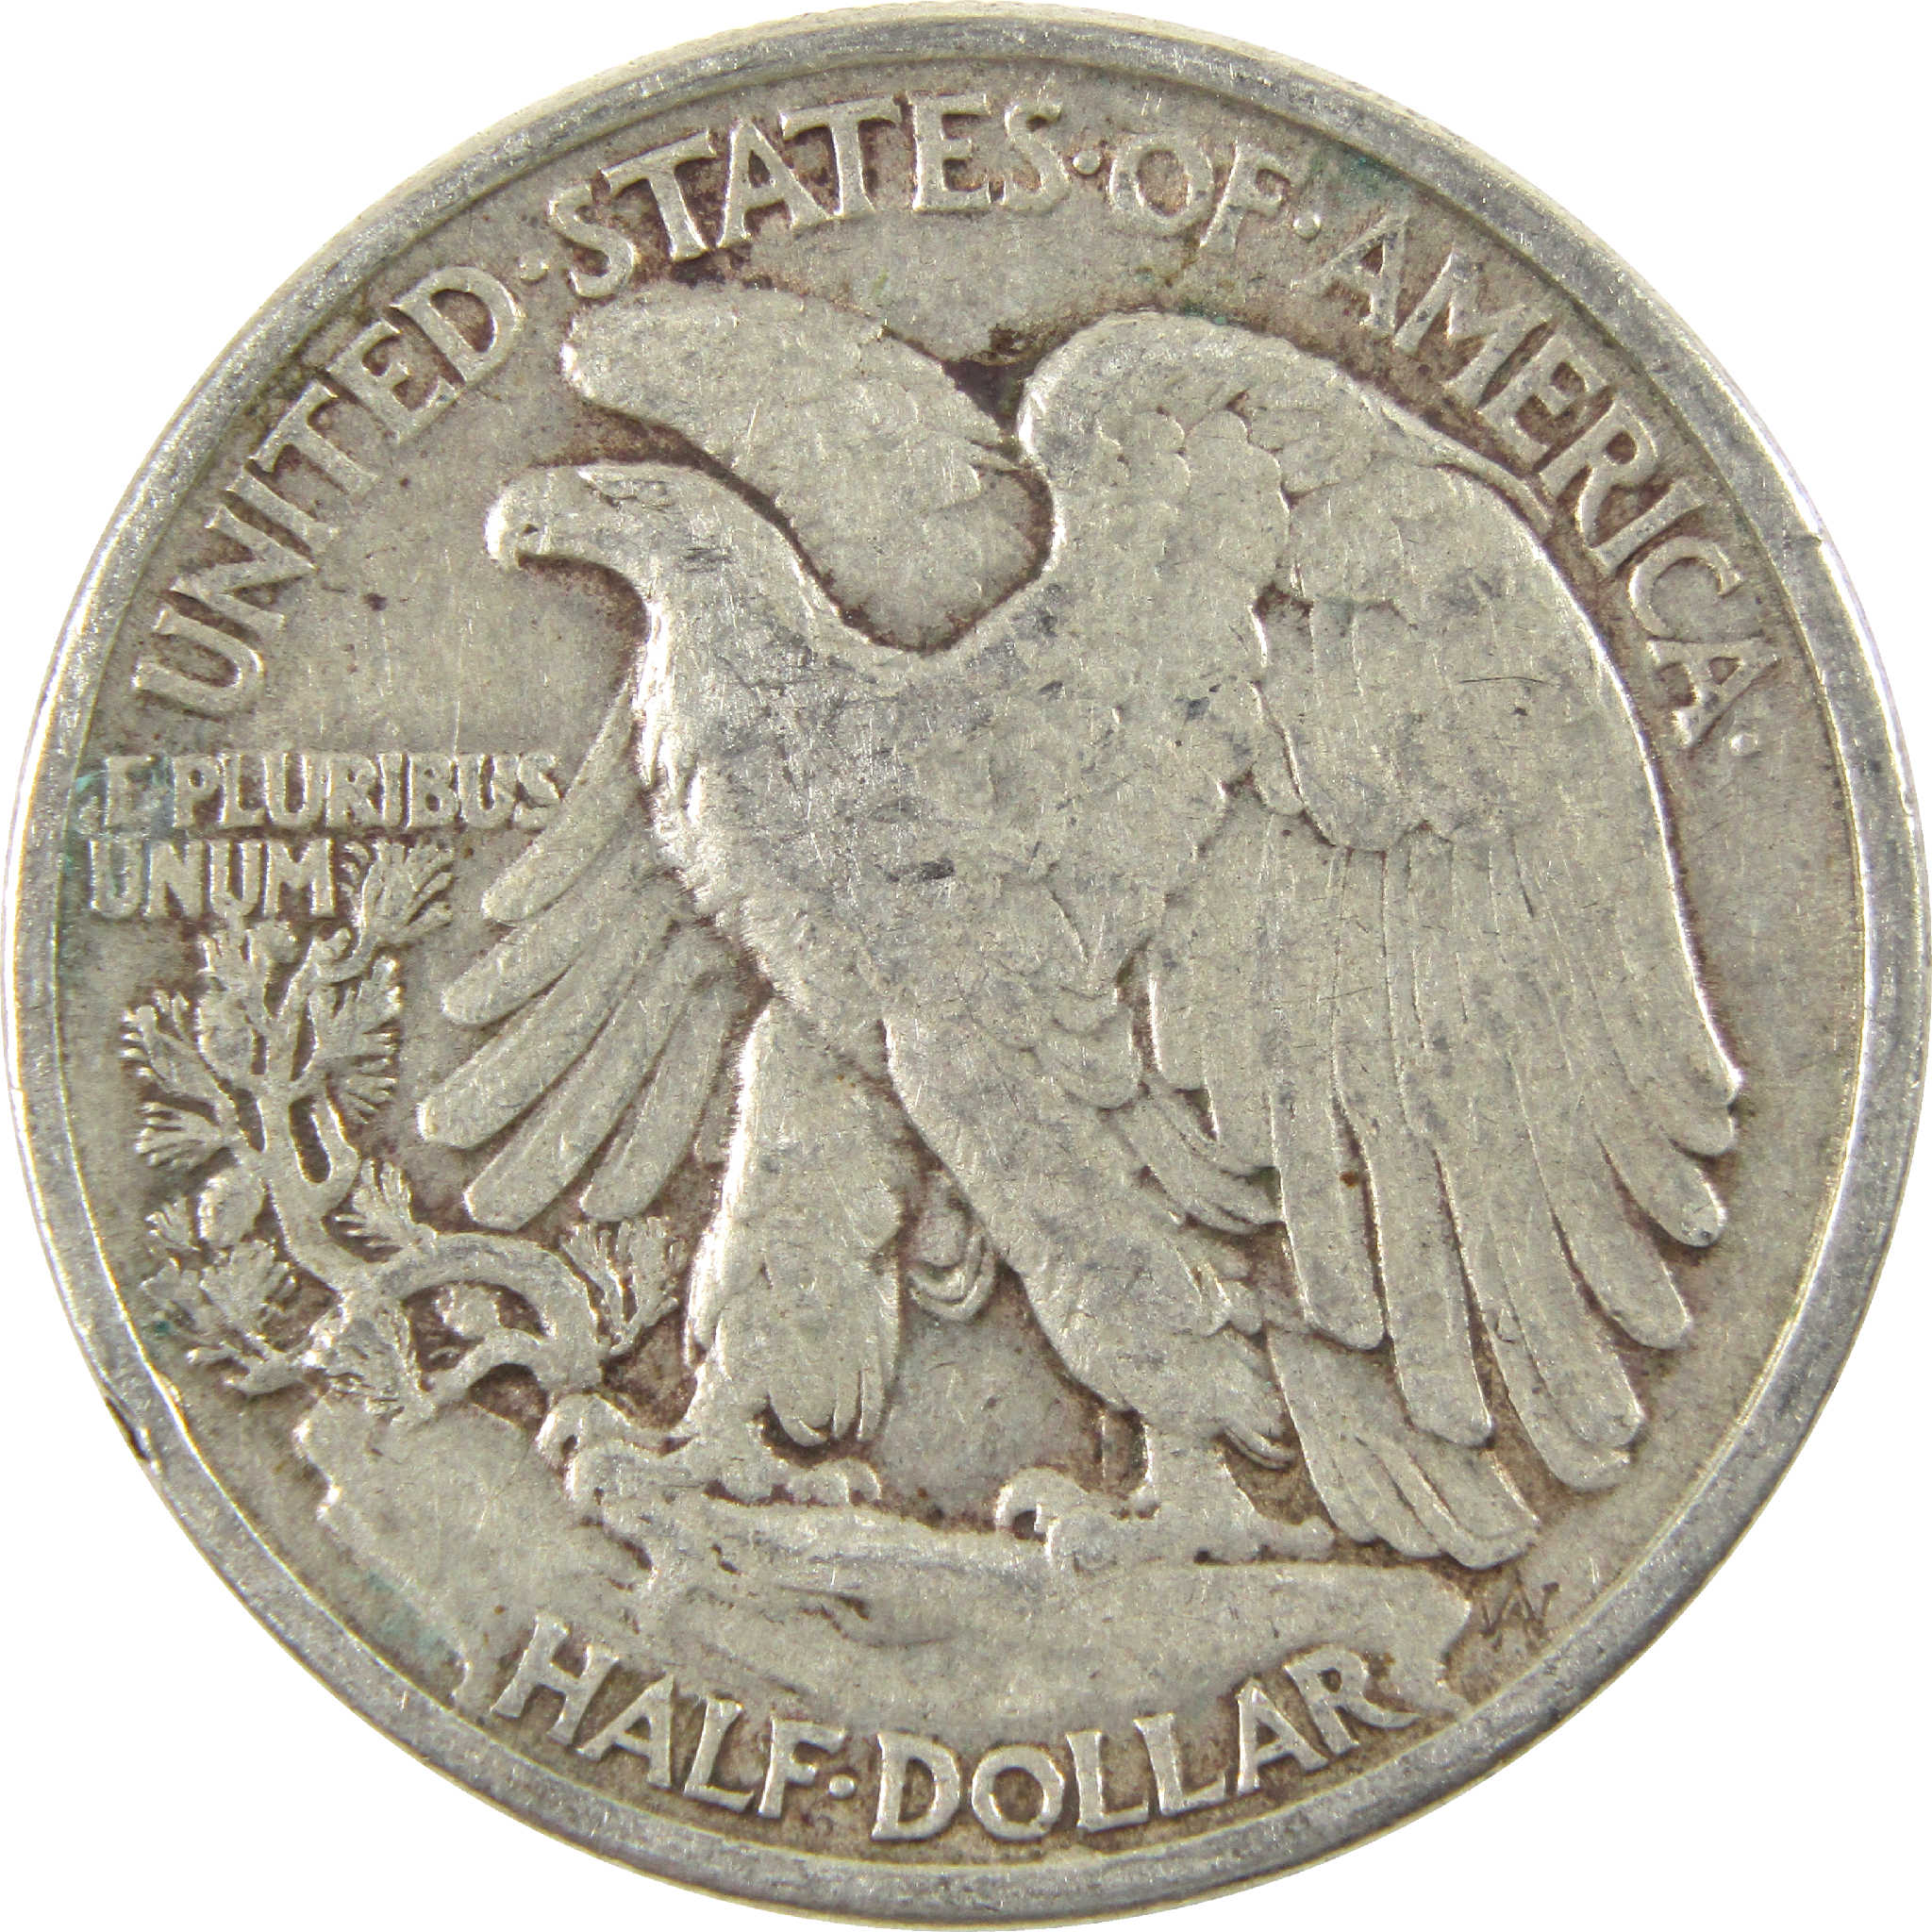 1937 Liberty Walking Half Dollar VF Very Fine Silver 50c Coin